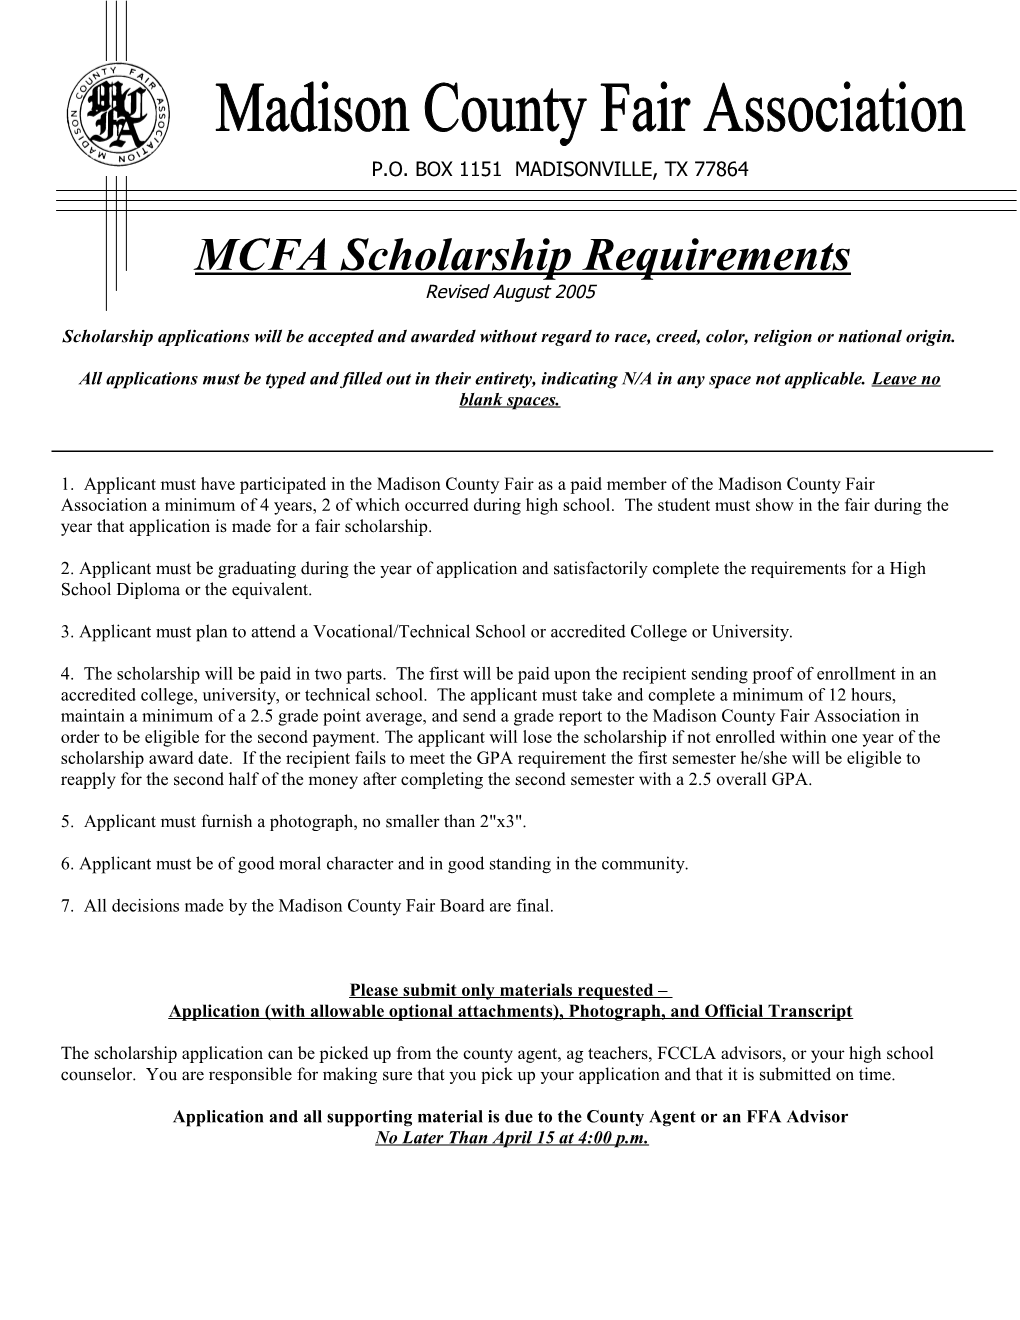 MCFA Scholarship Requirements